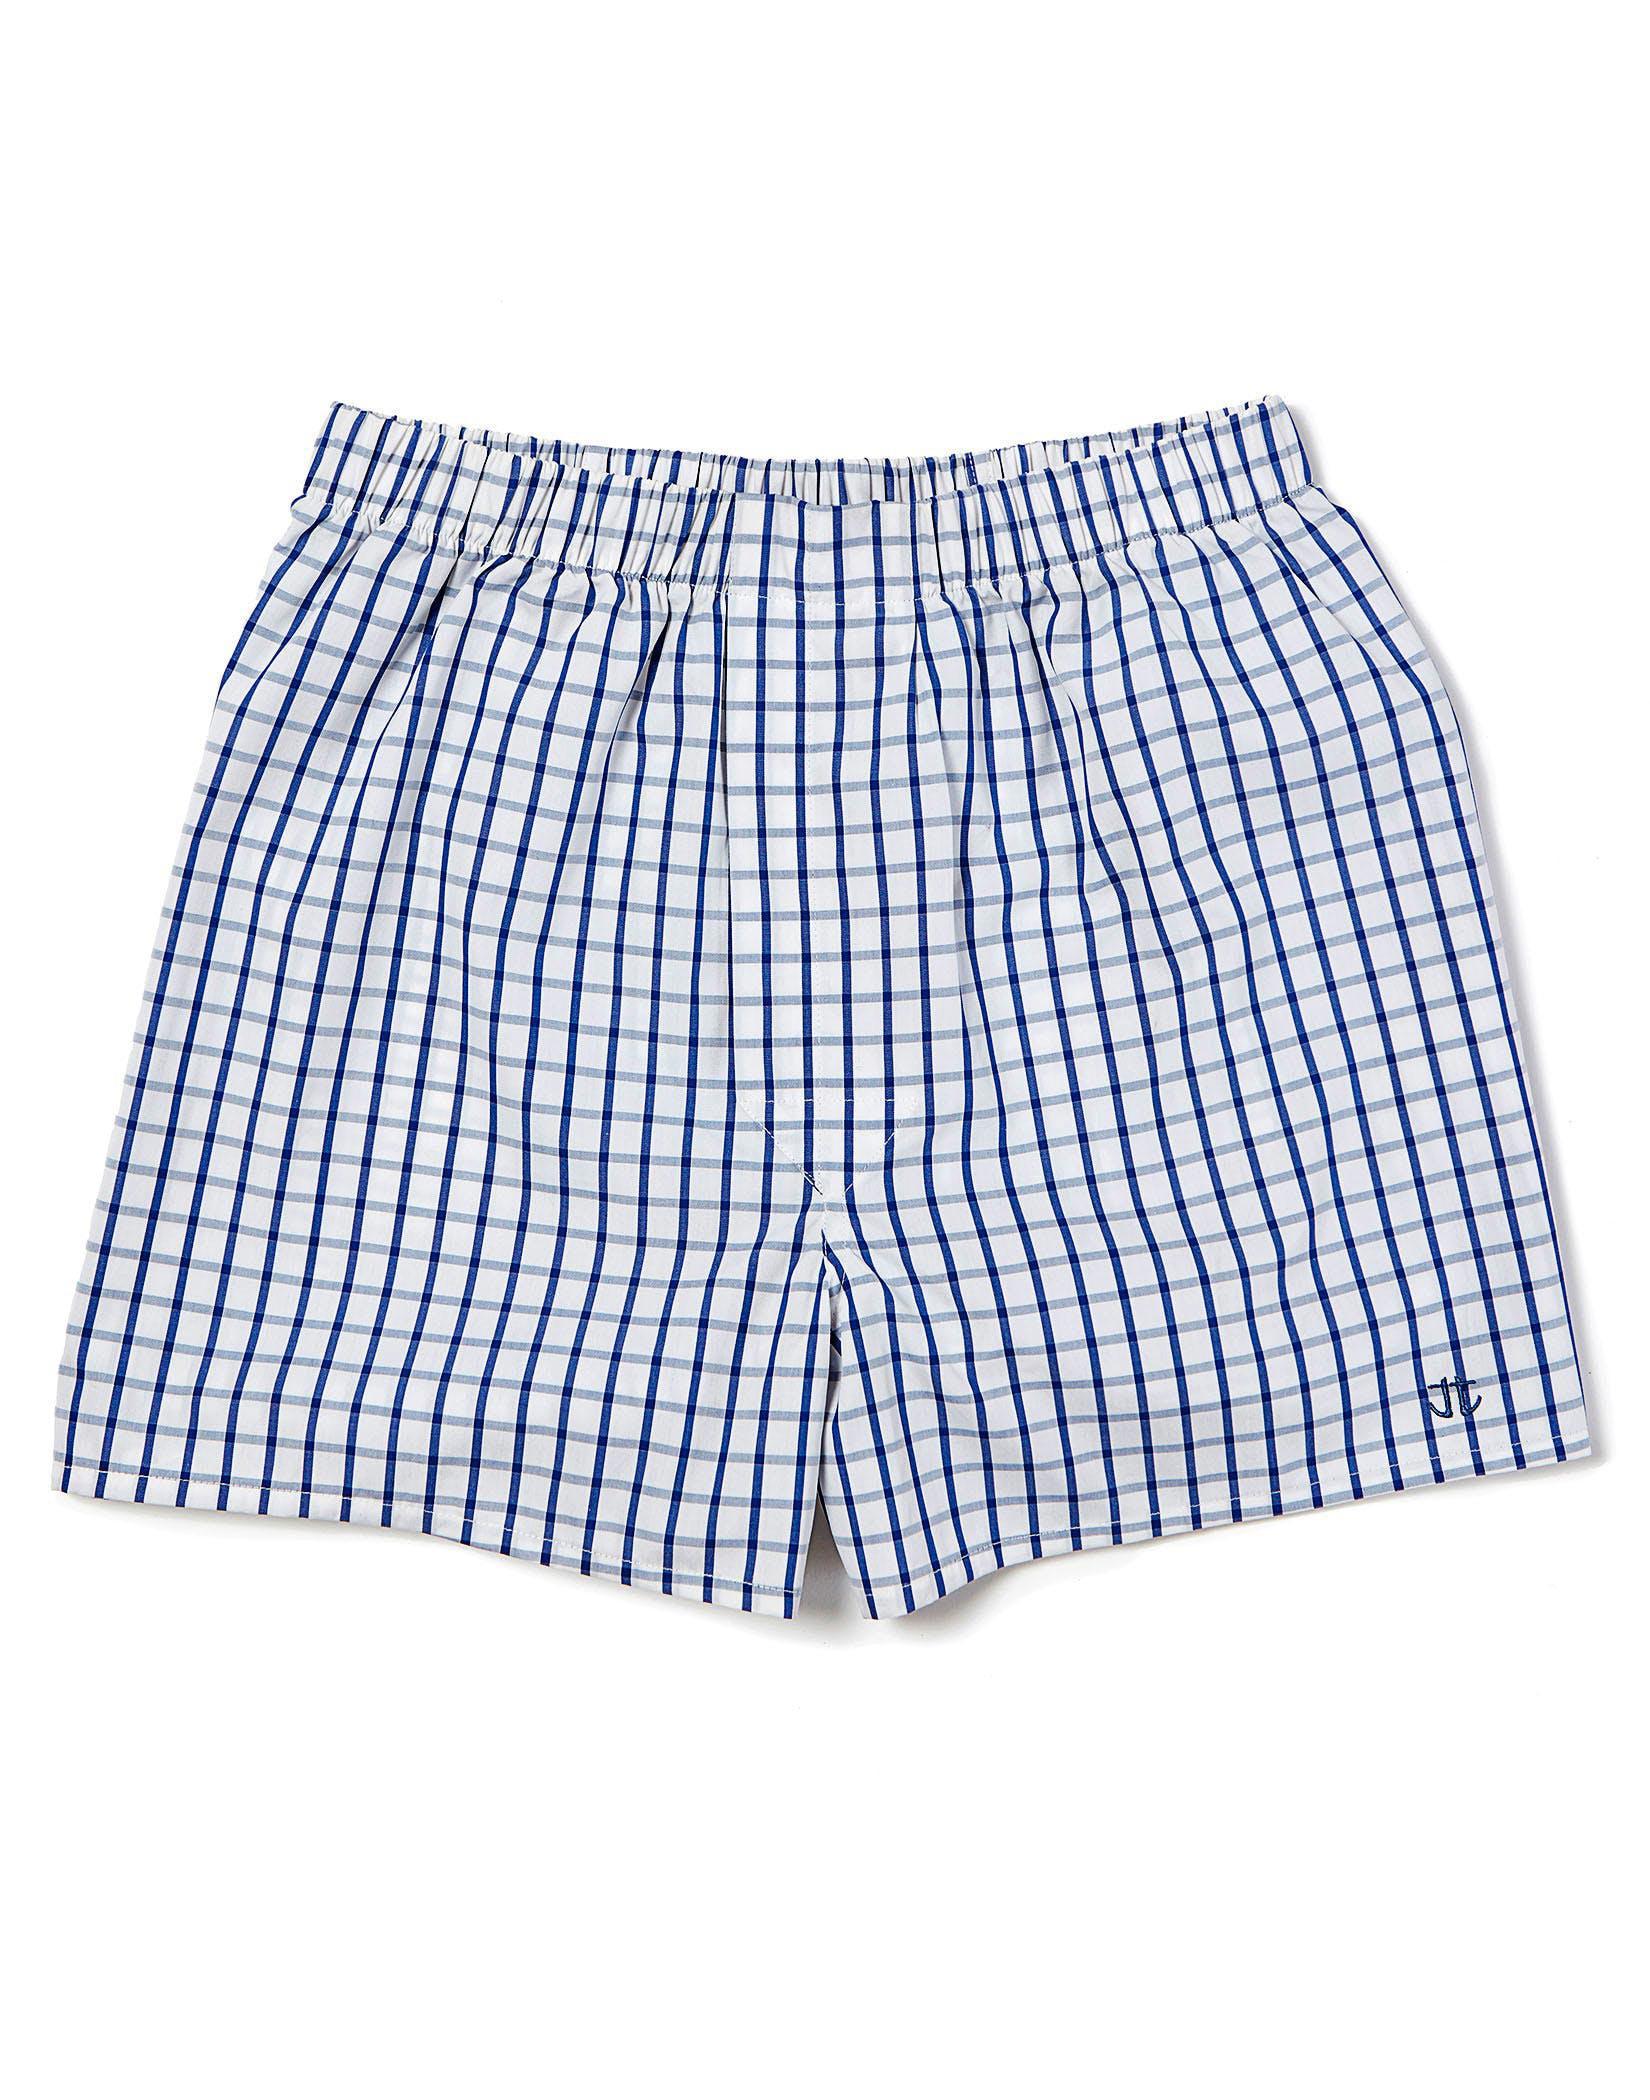 Boxer Shorts - Blue Hardwick Check